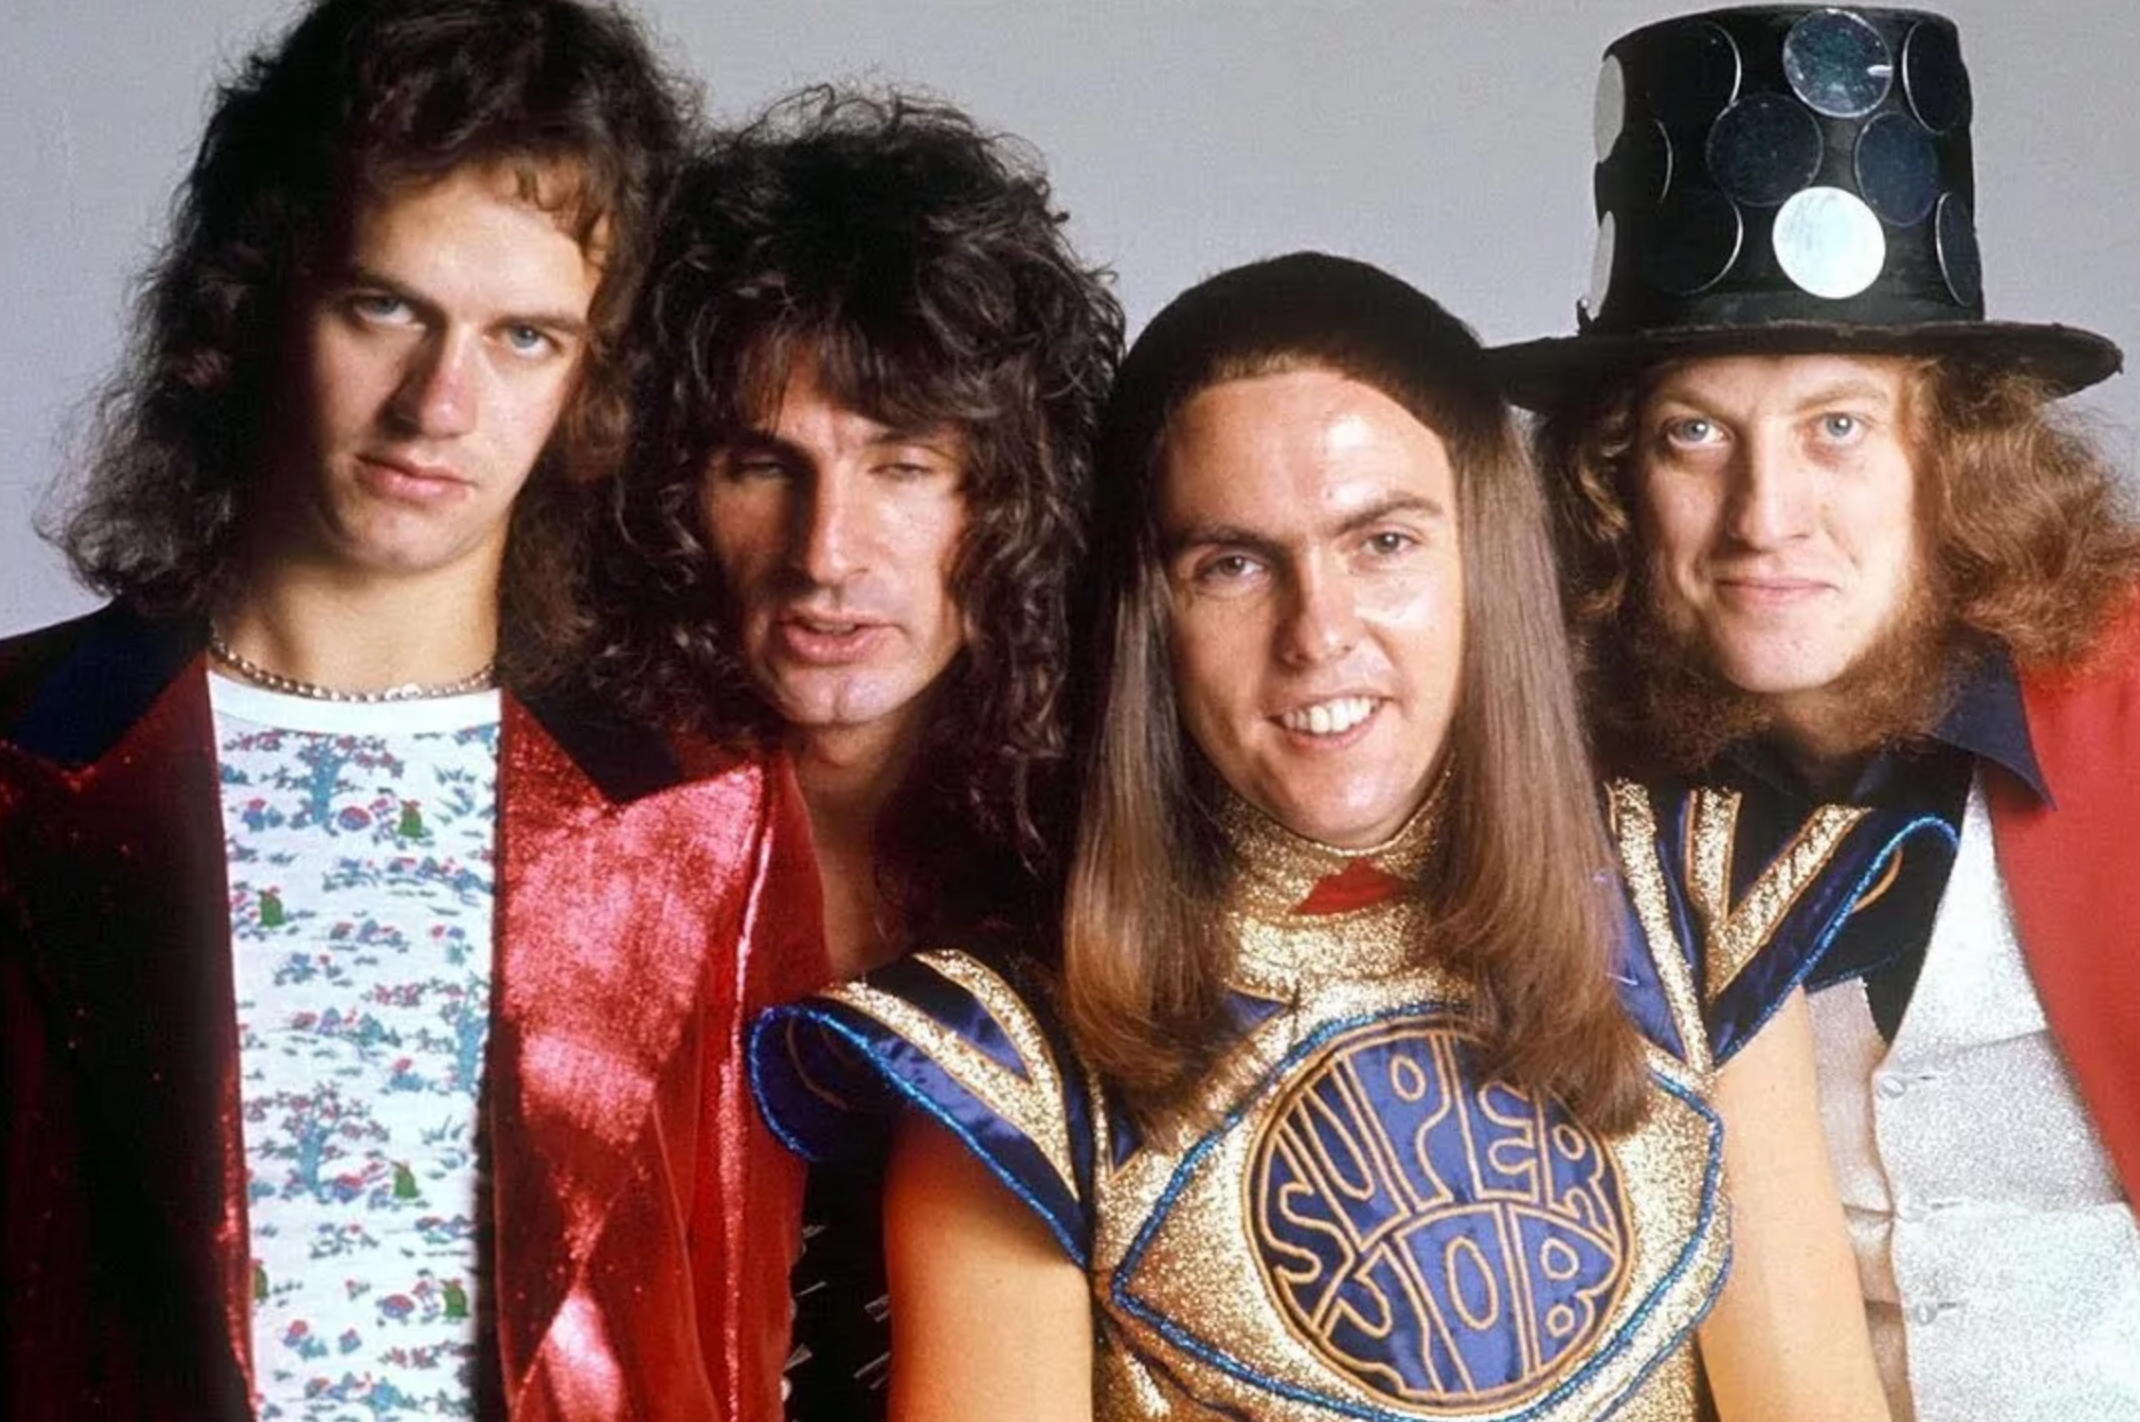 70 группа музыка. Группа Slade. Обложки группы Slade. Группа Slade в 70х. Slade 1988.